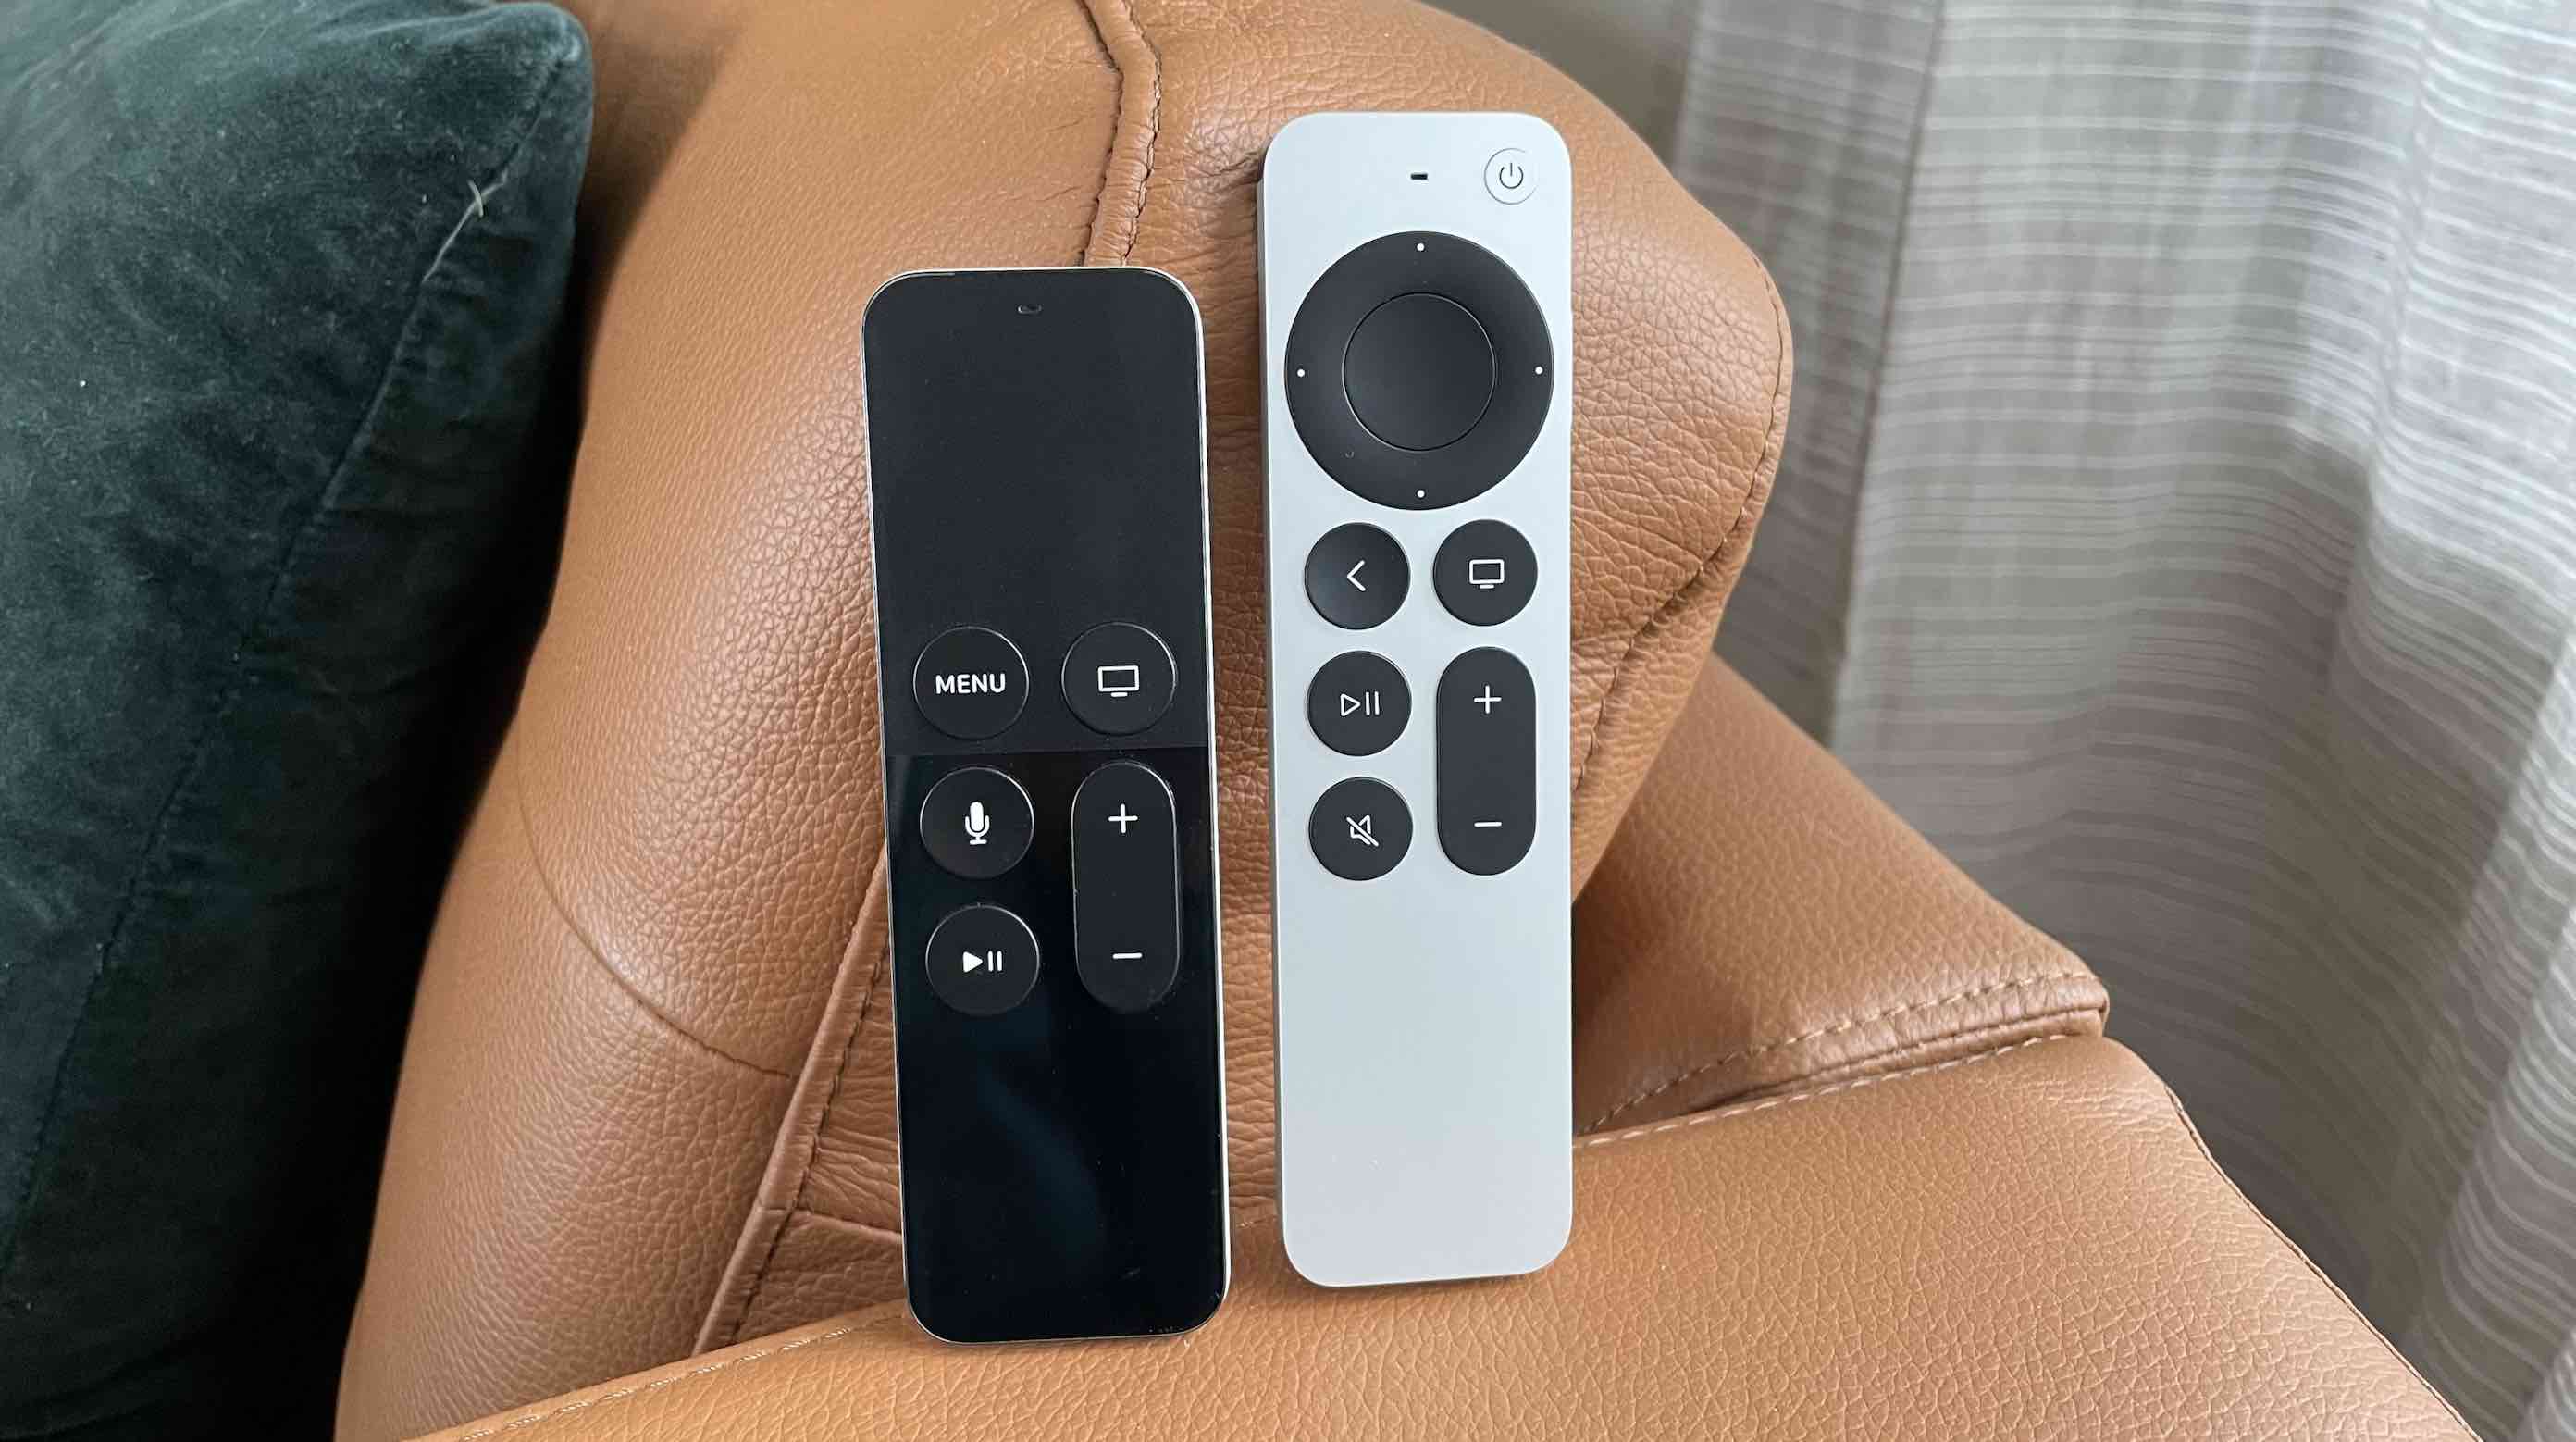 ipad remote for apple tv